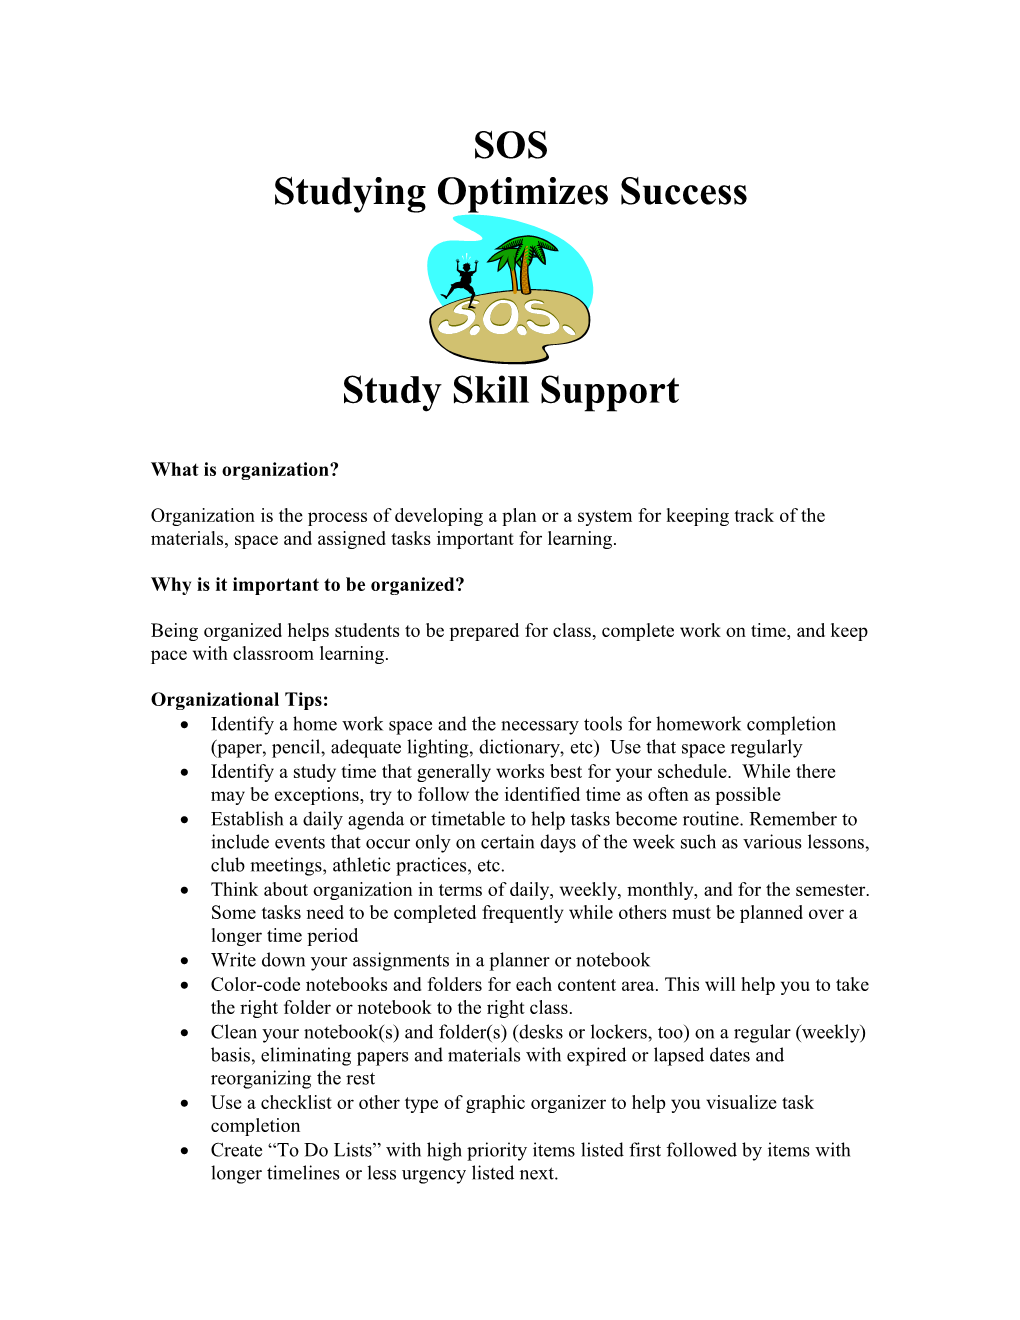 Studying Optimizes Success